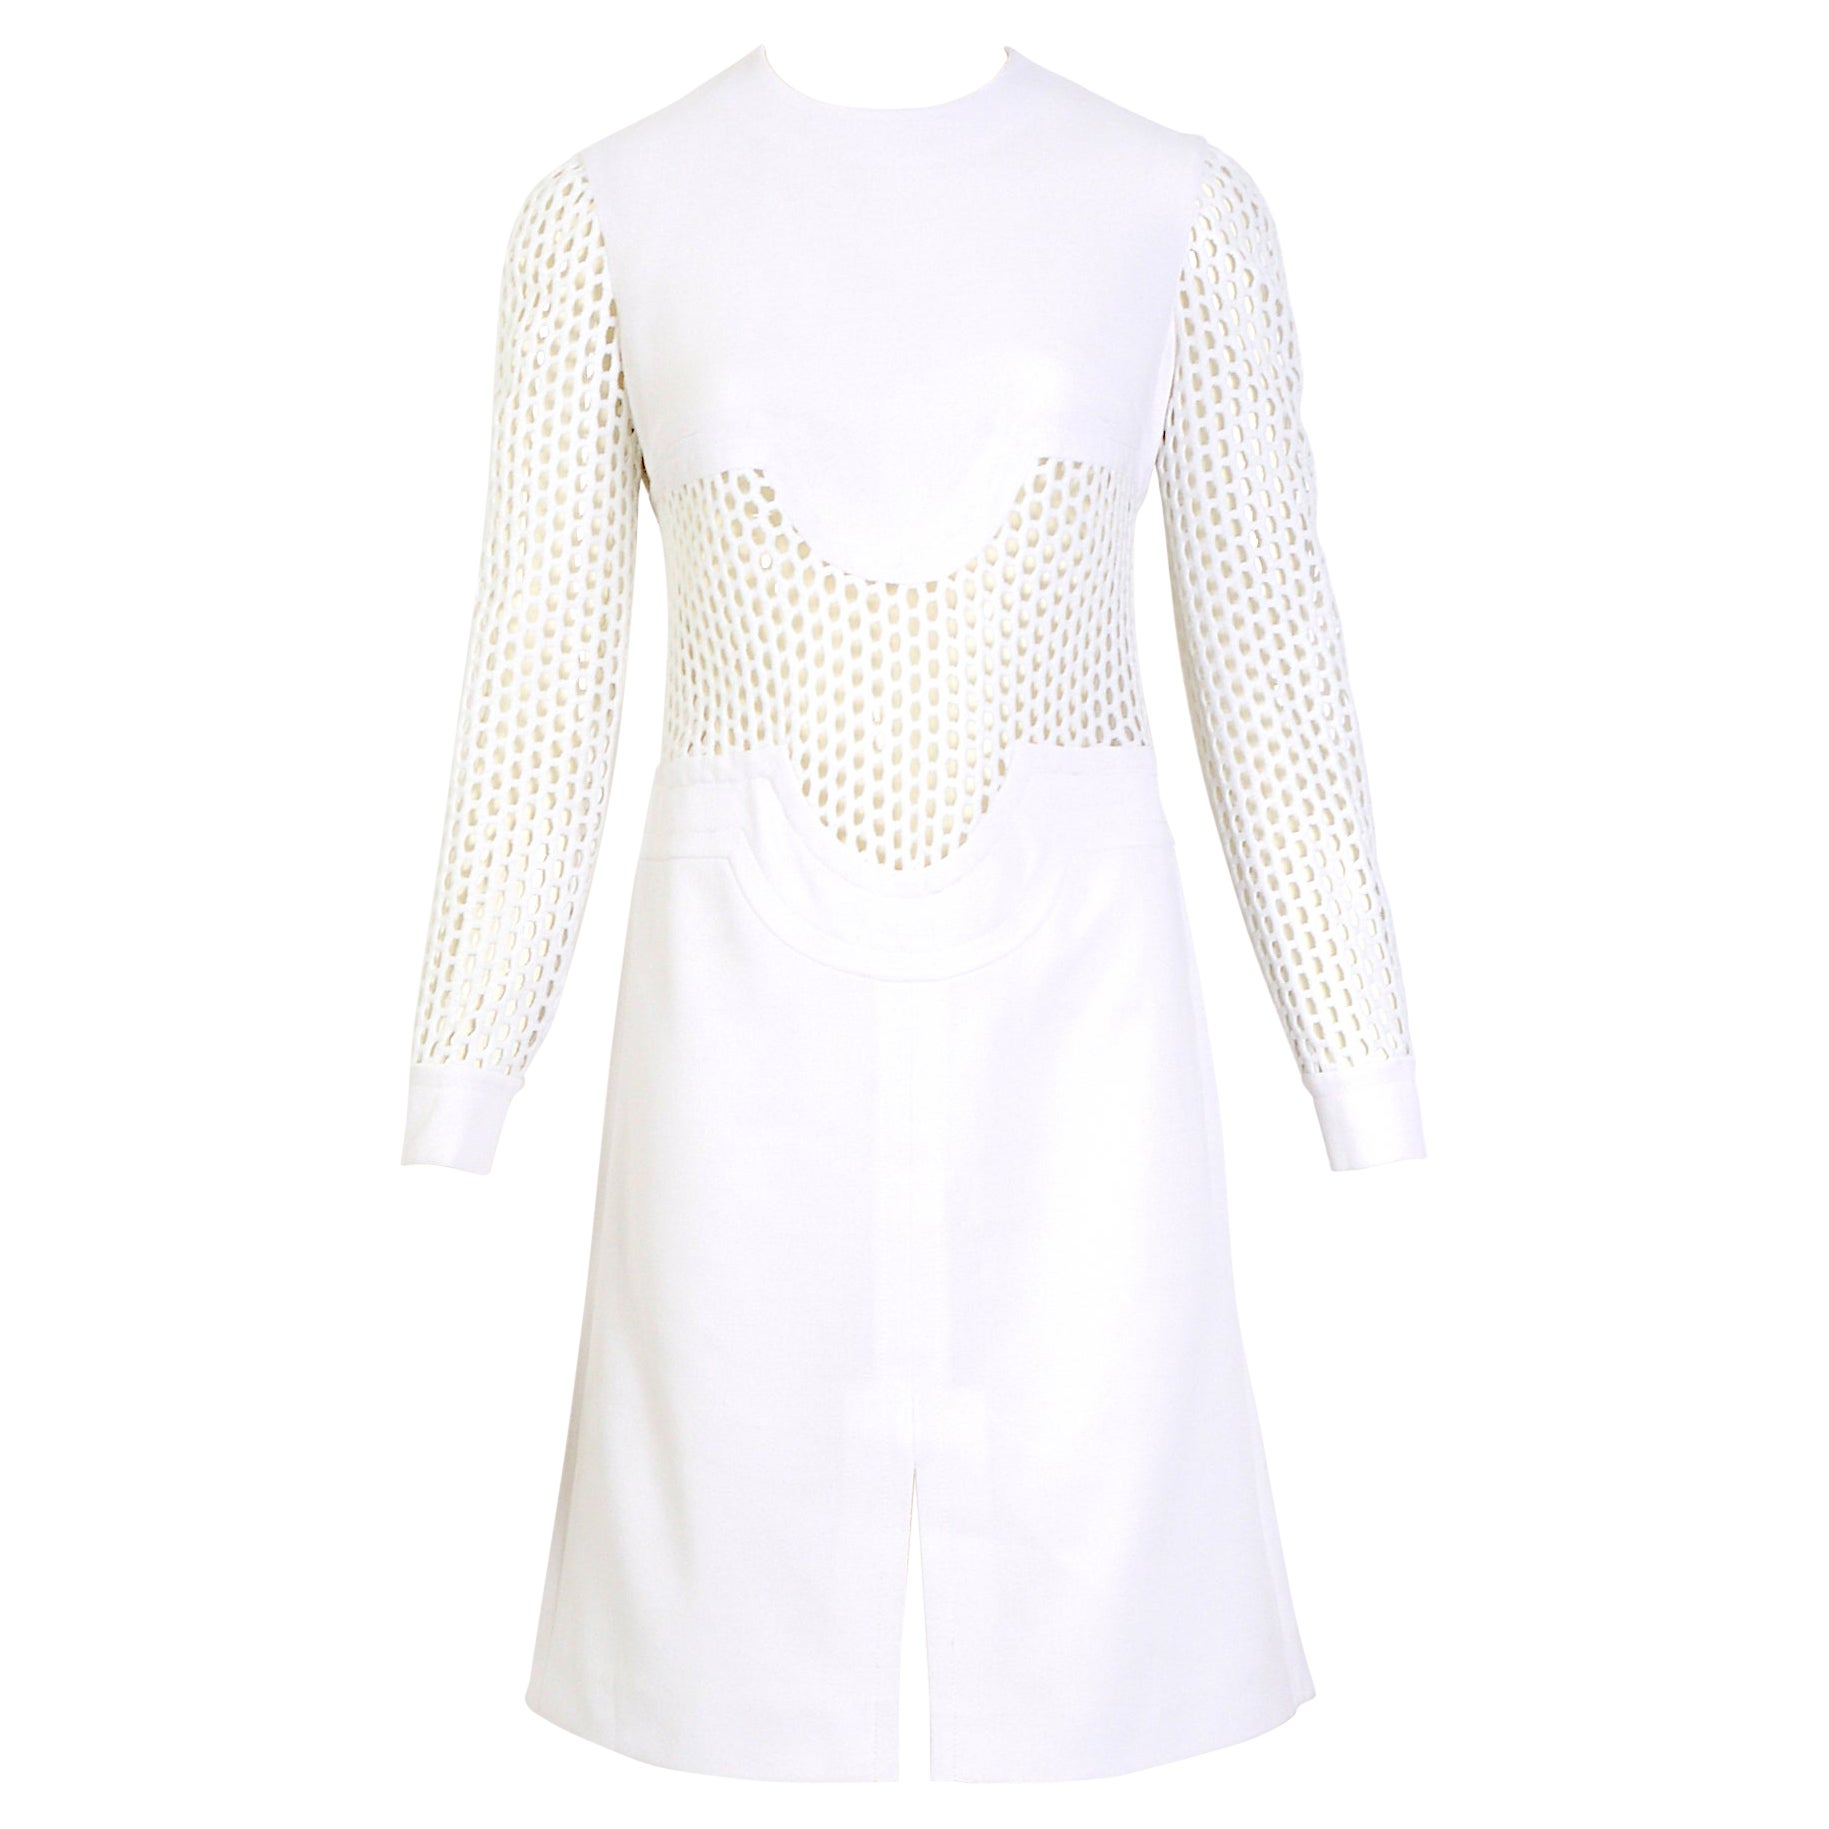 Pierre Cardin iconic 60s vintage sleeves & midriff transparent mesh white dress